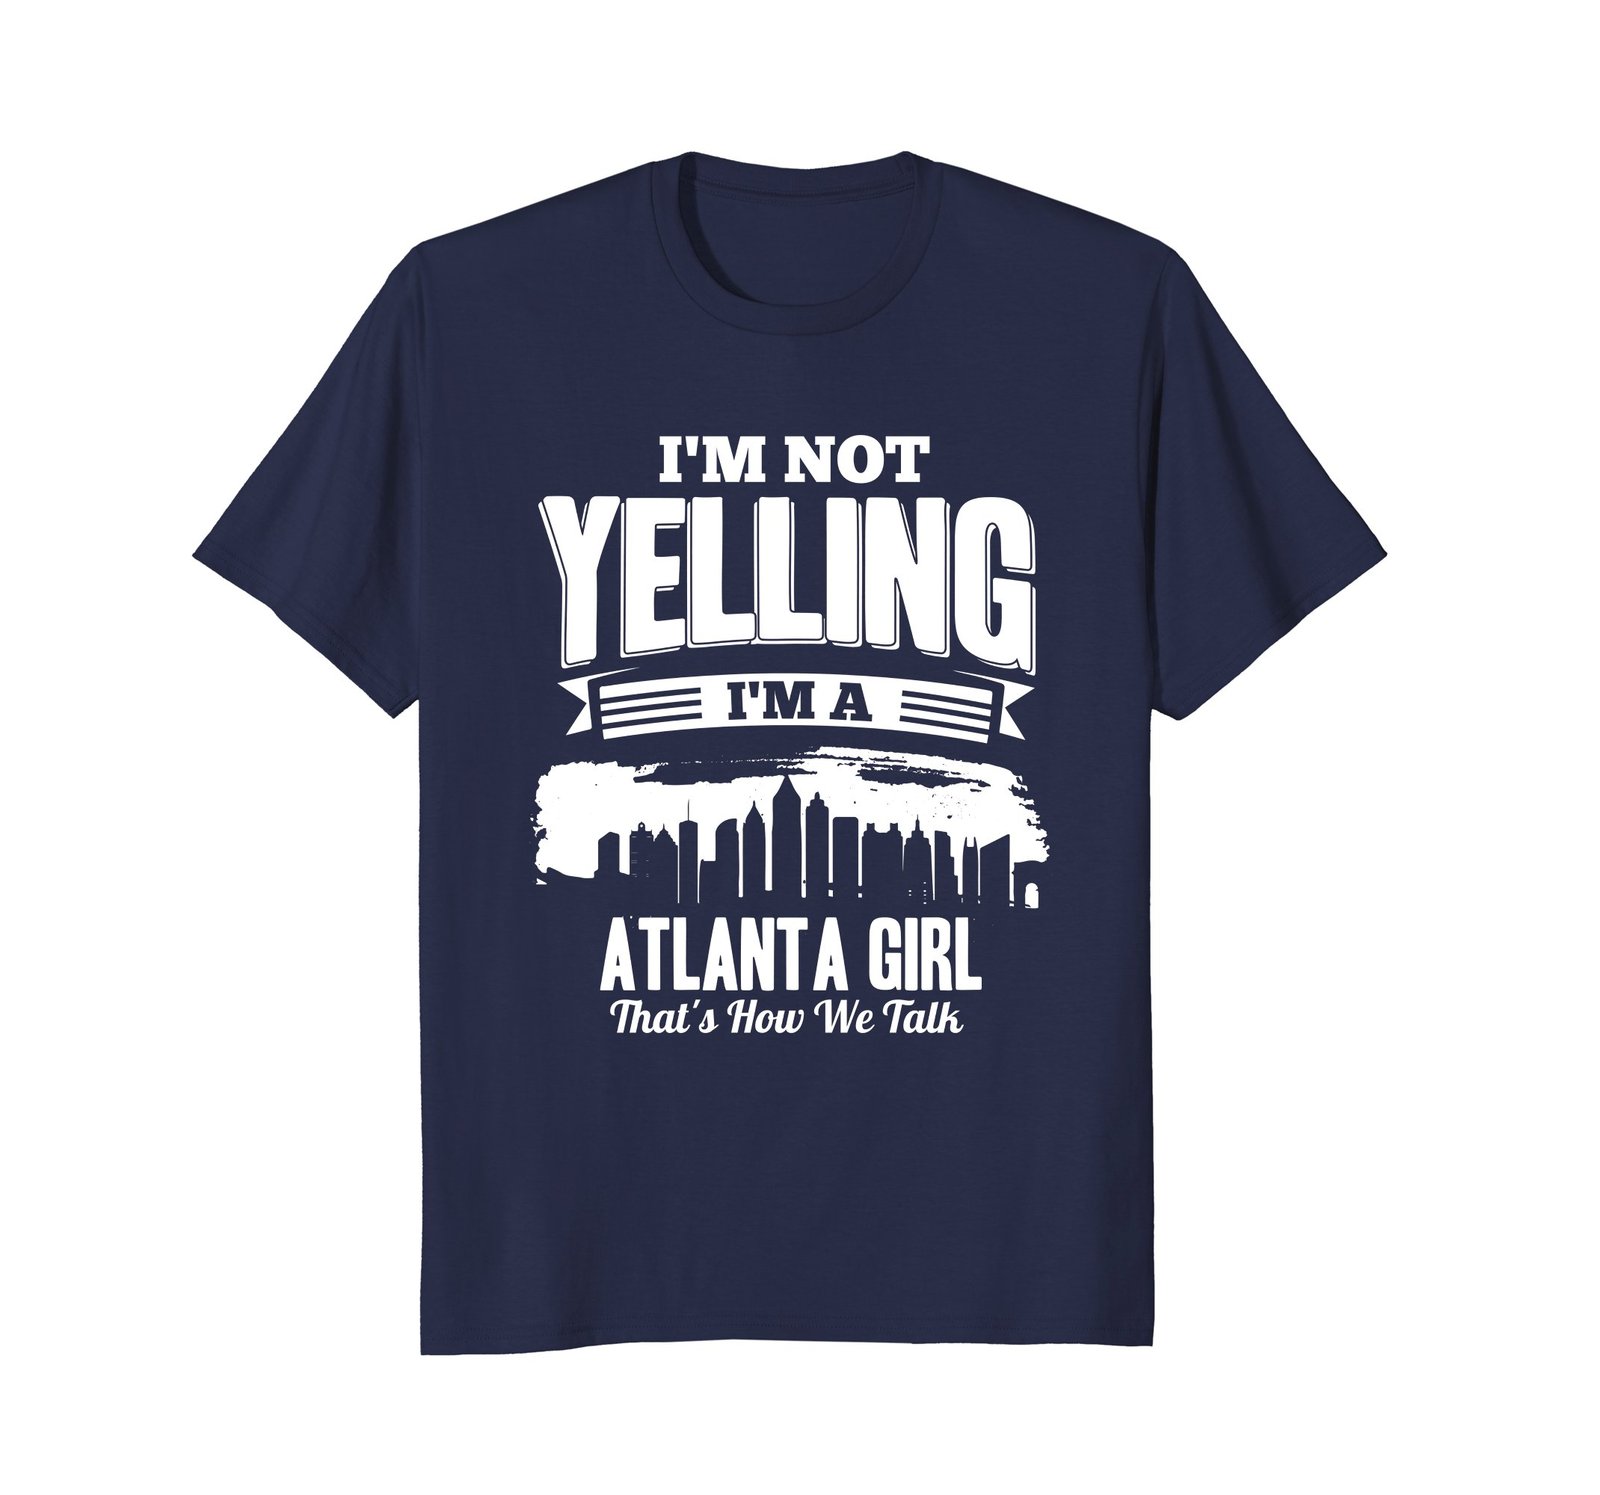 Funny Shirts - I'M NOT YELLING I'M An Atlanta GIRL T-shirt Men